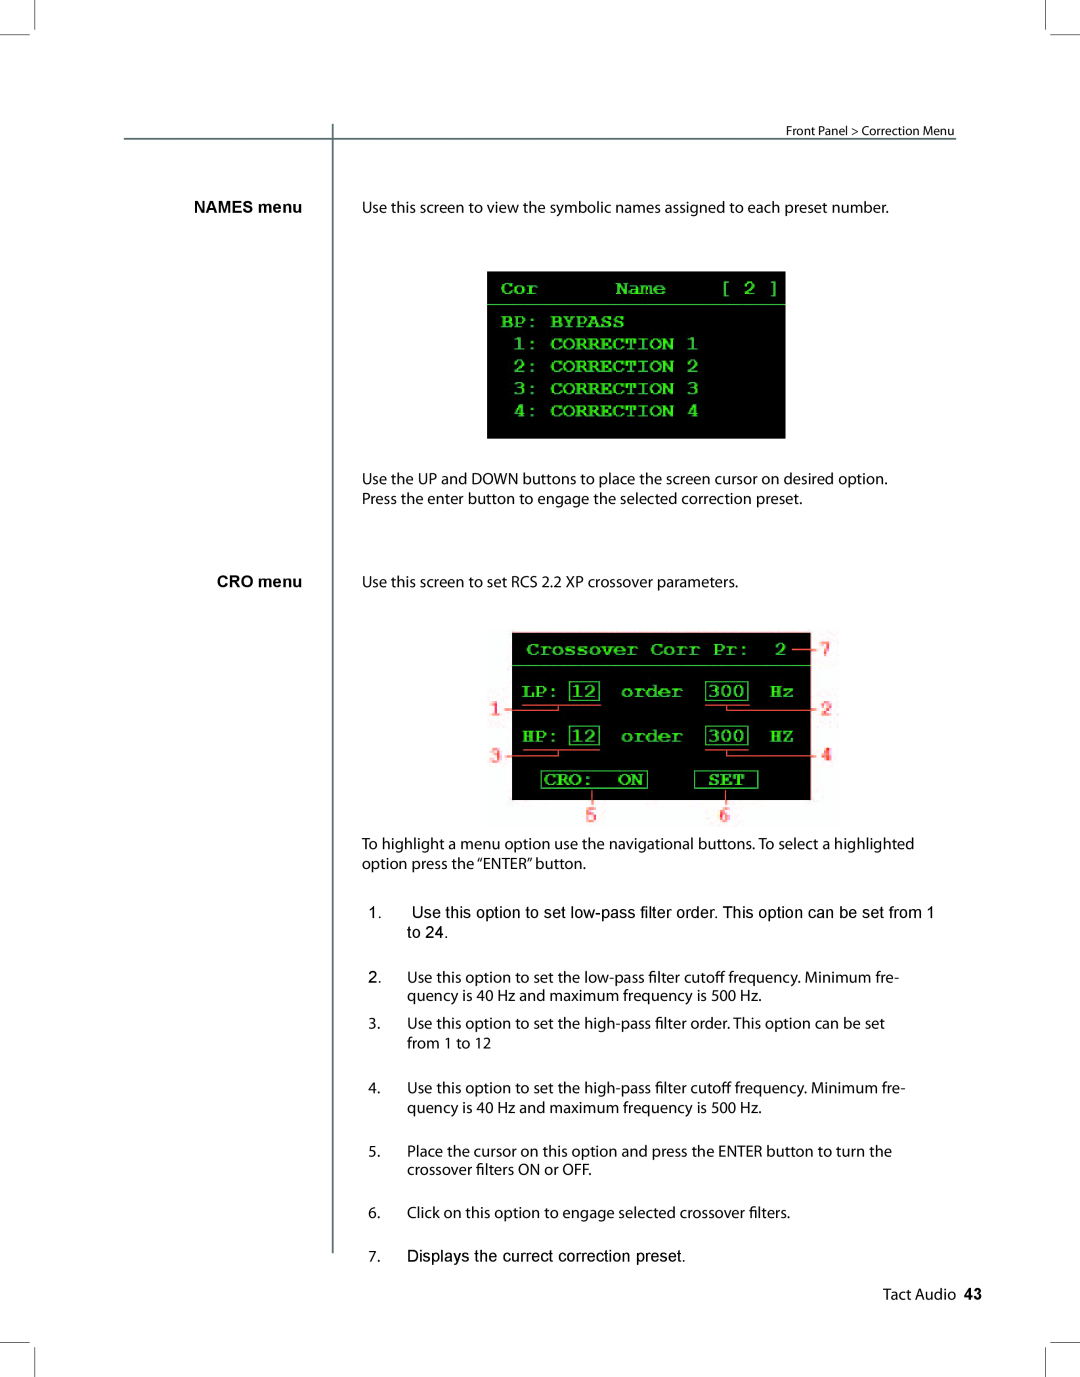 TacT Audio RCS 2.2 XP owner manual NAMES menu, CRO menu 